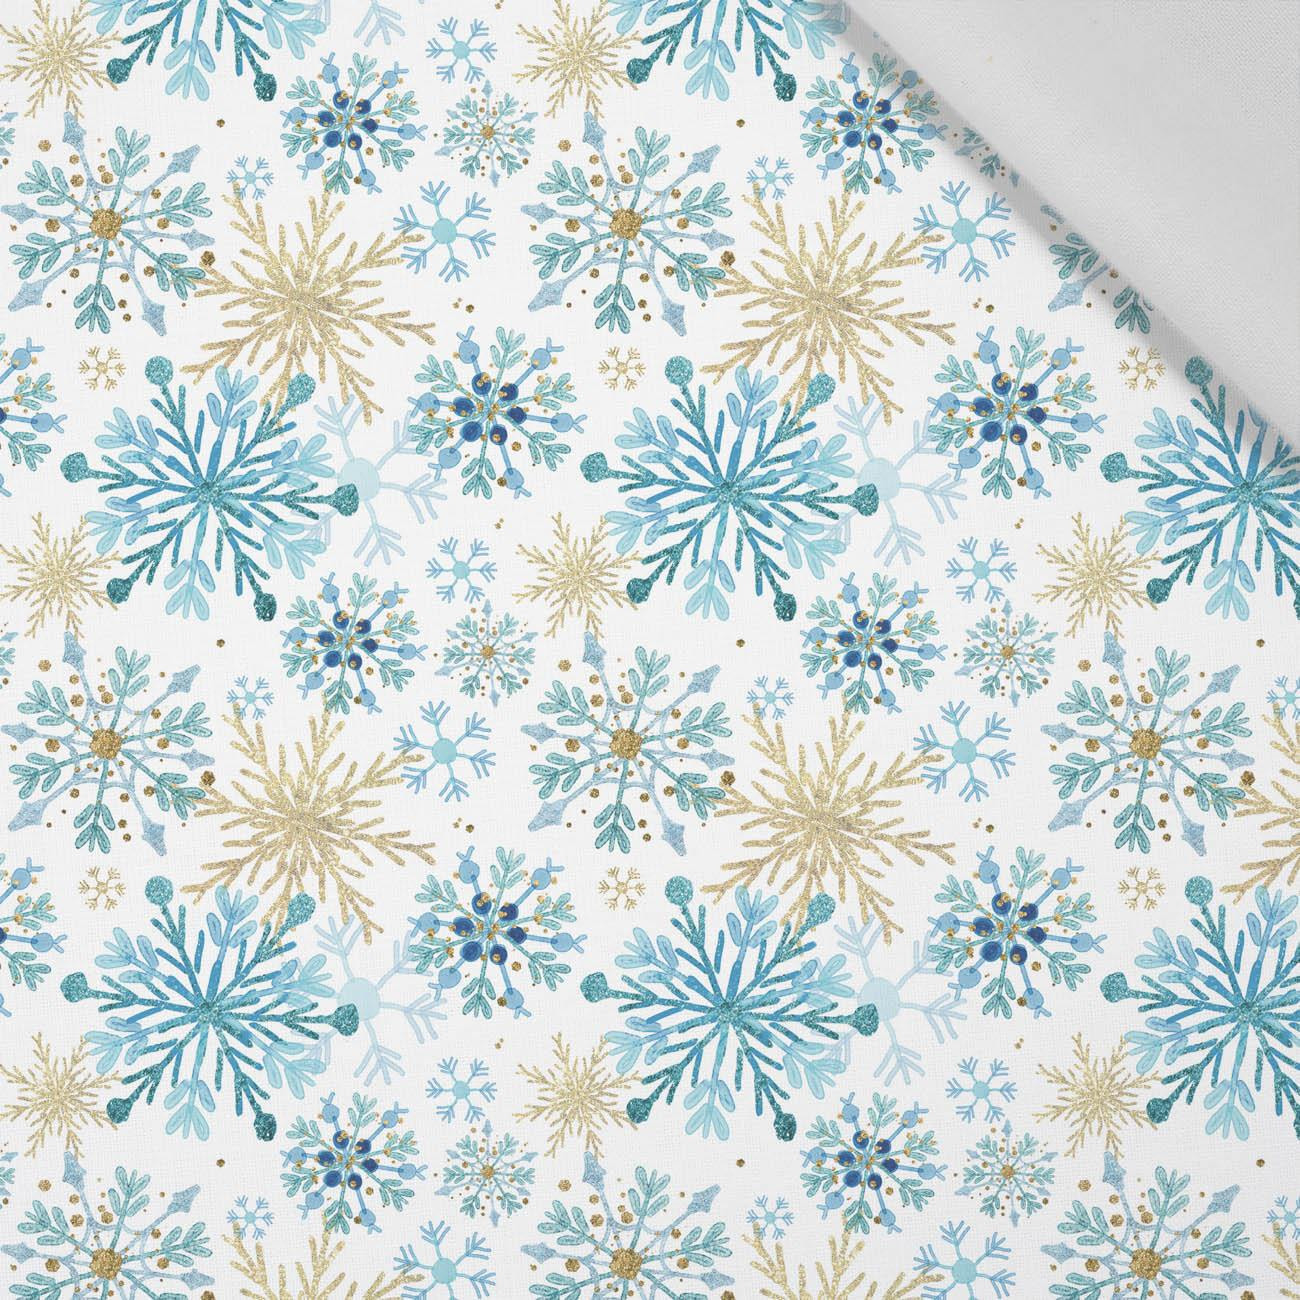 BLUE SNOWFLAKES  - Cotton woven fabric